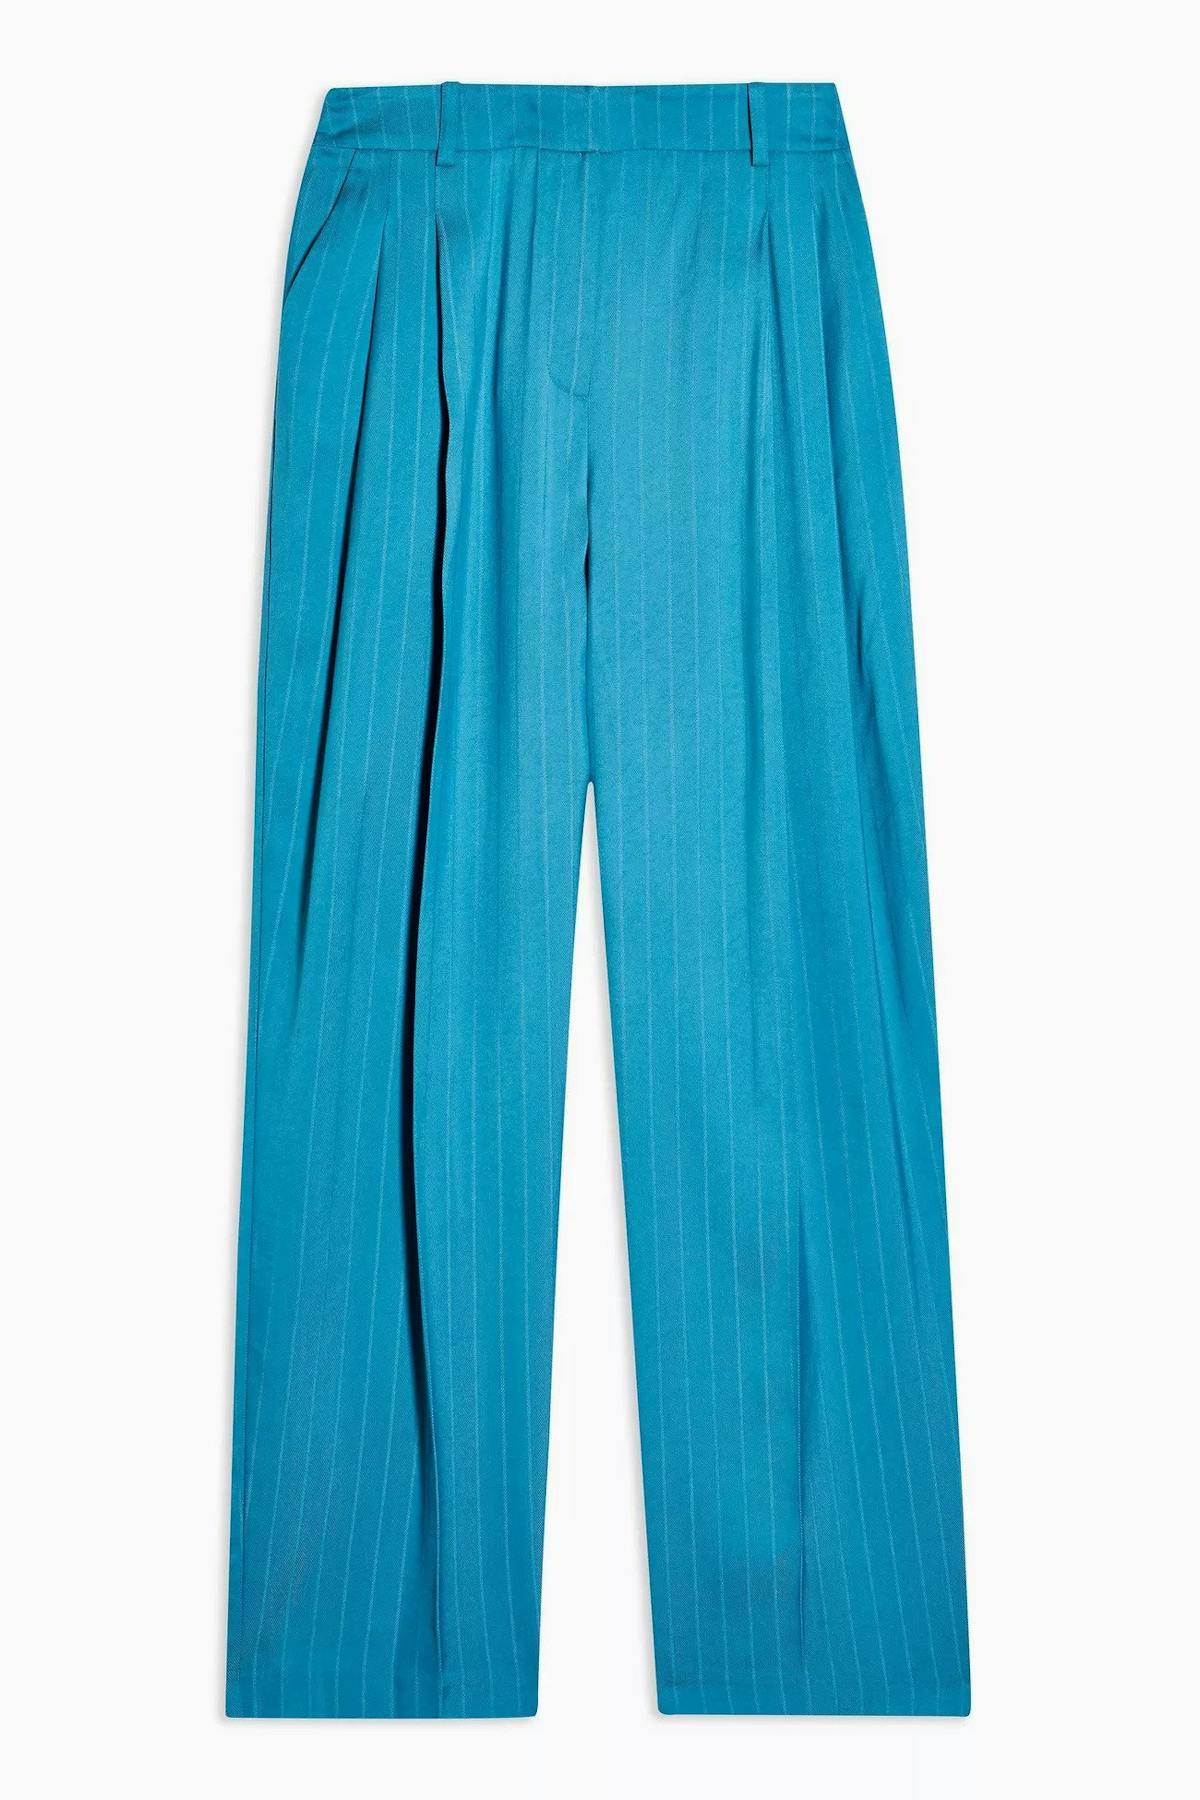 Best summer trousers to wear in the heatwave